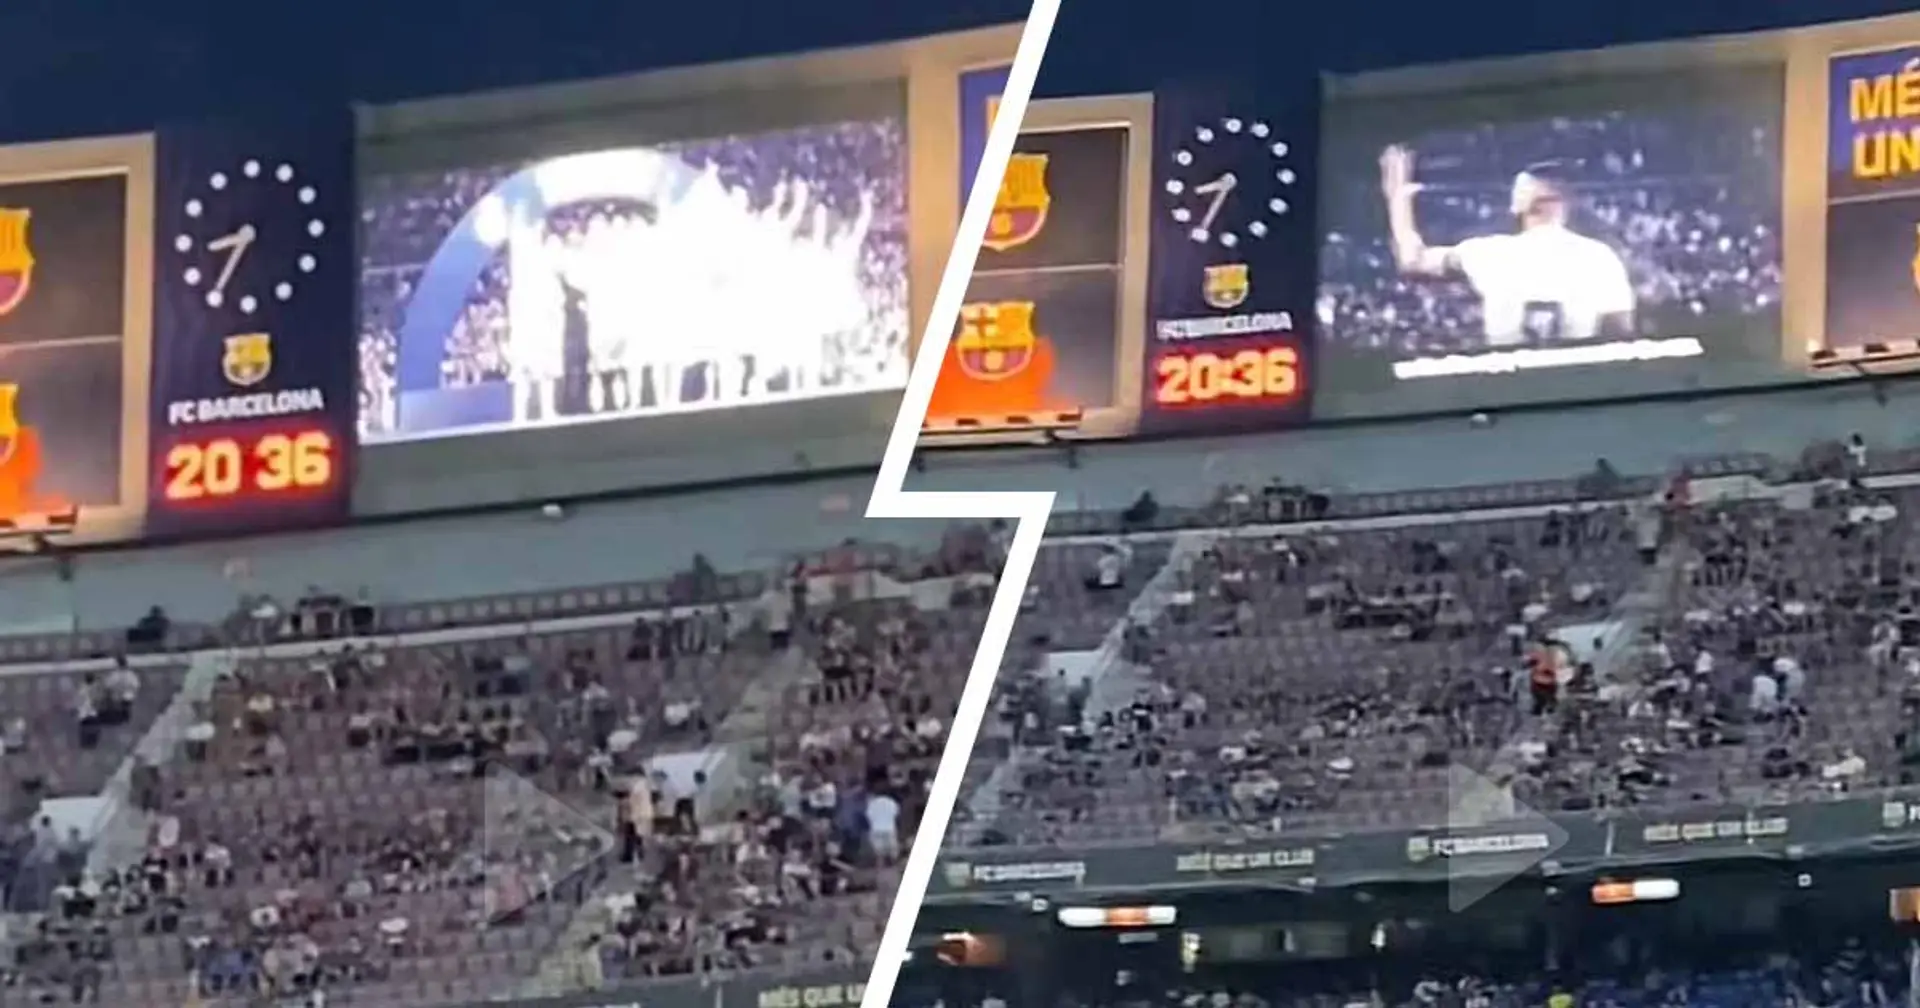 La pantalla del Camp Nou muestra un video del Real Madrid celebrando el trofeo de la Champions, minutos antes del partido del Barça